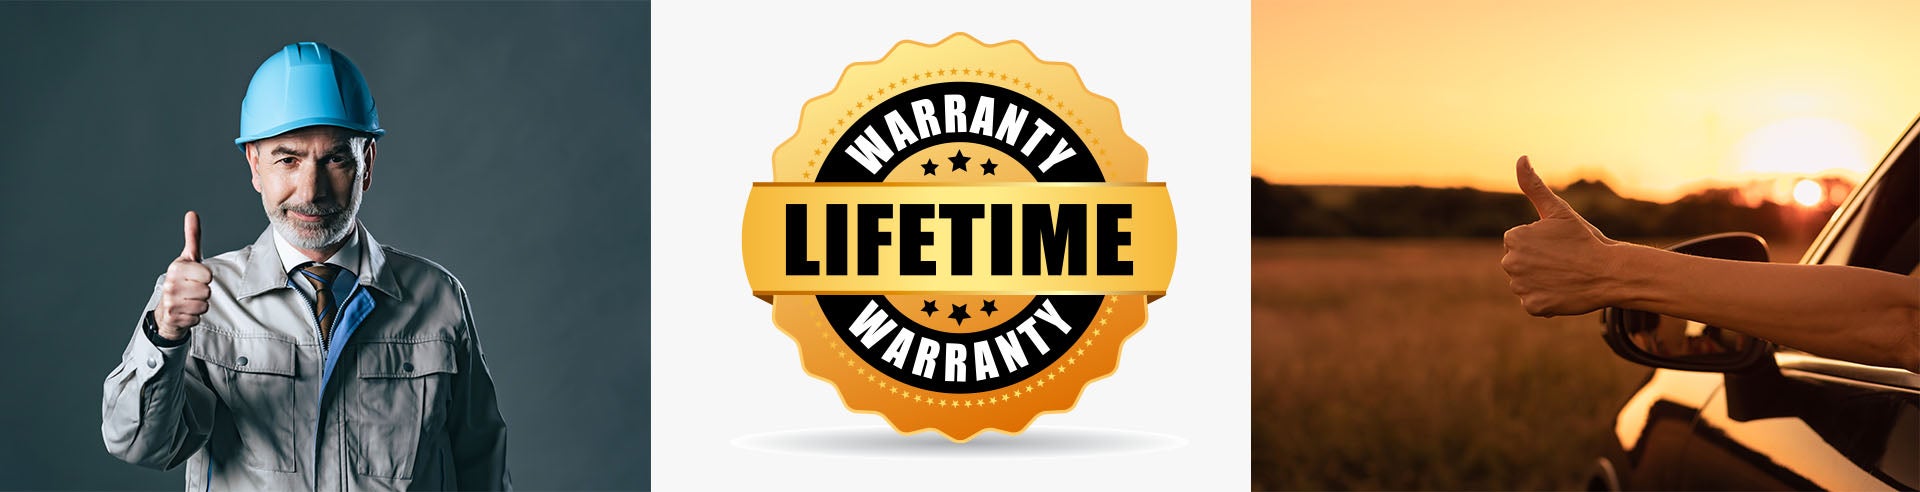 Kramer Auto Body Shop Lifetime Warranty